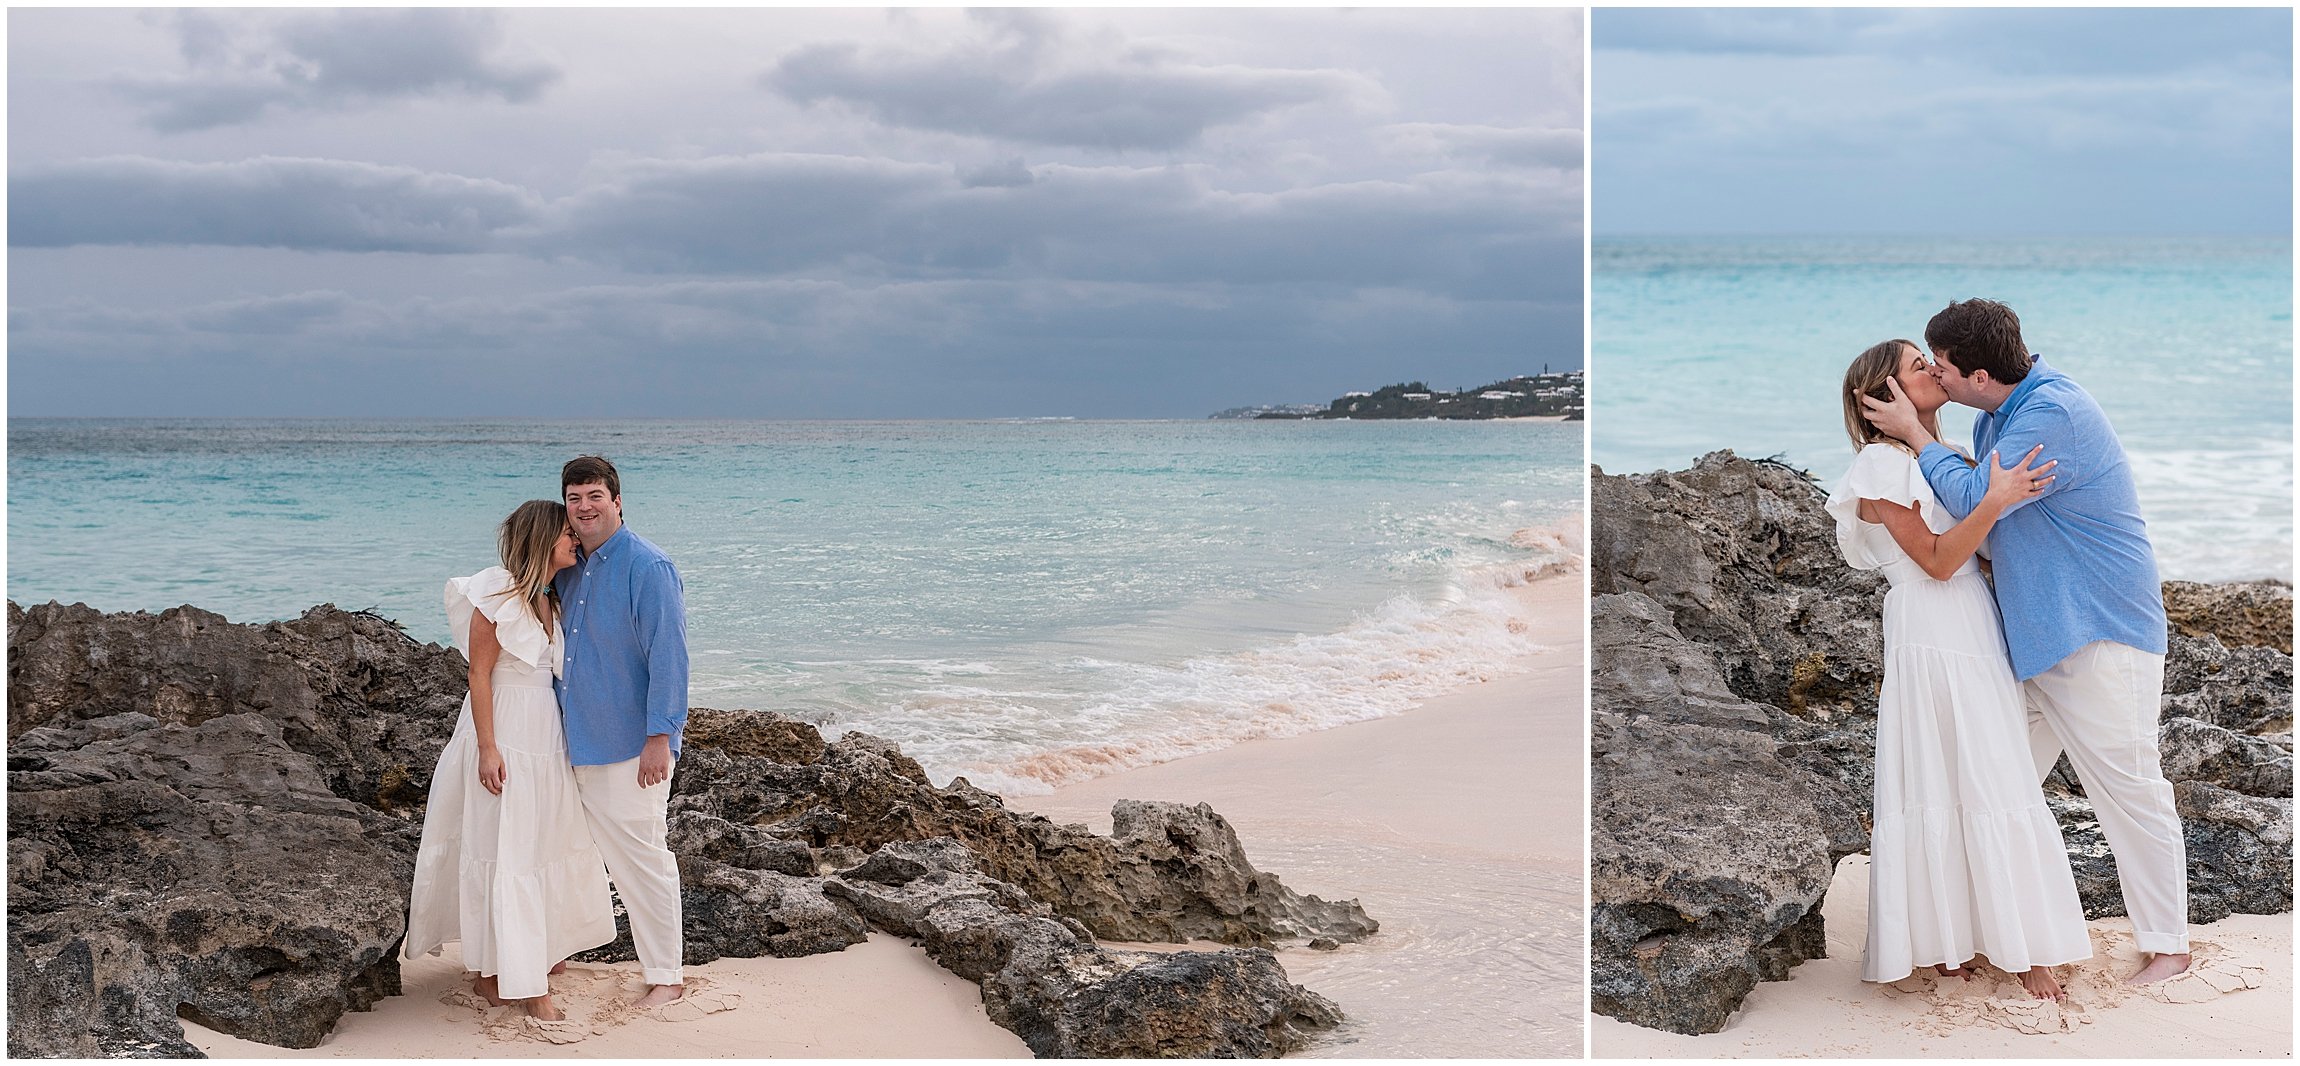 Mid Ocean Club Bermuda_Photographer_©Fiander Foto_024.jpg